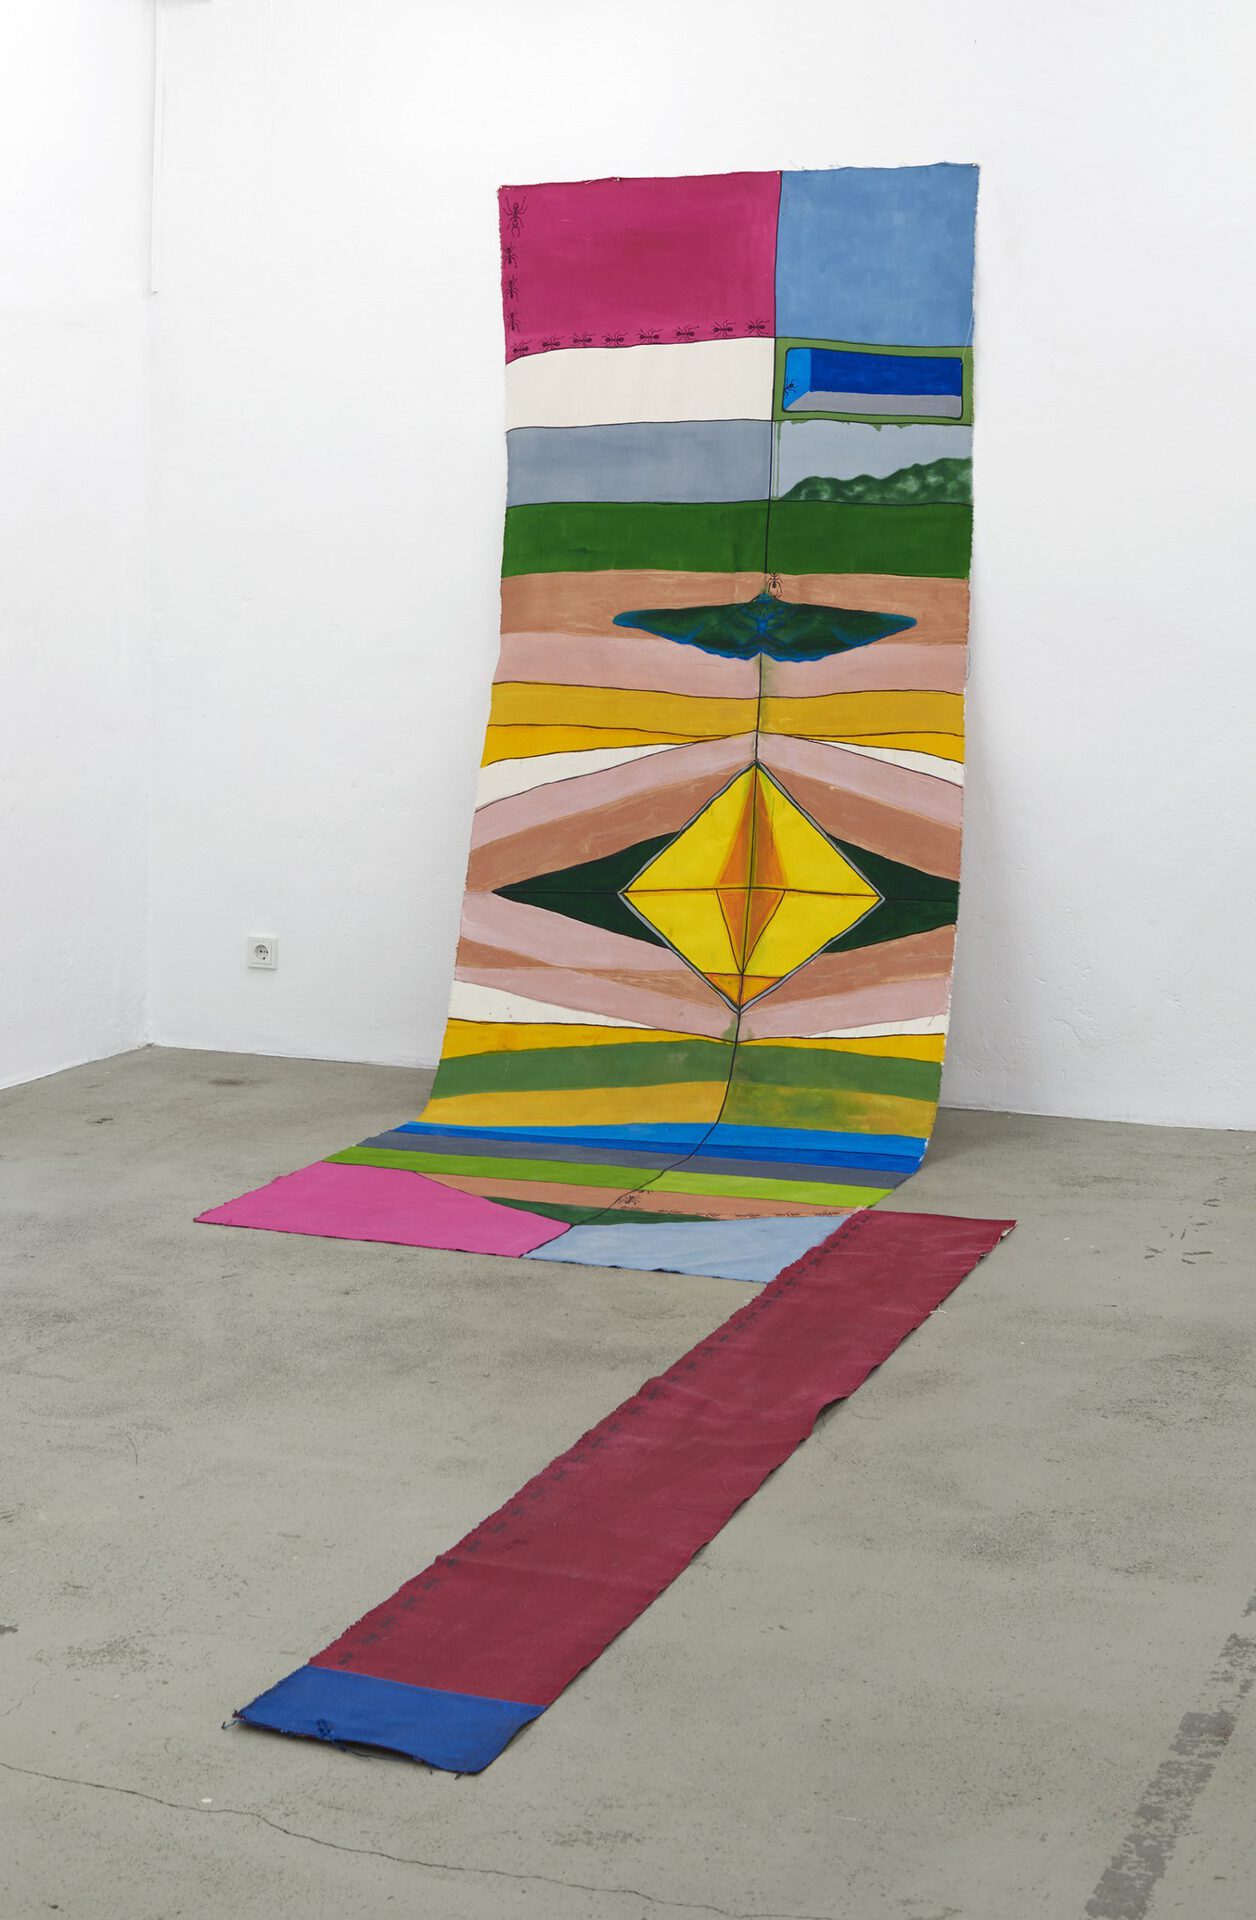 Lotte Maiwald, Ameisenstraße, 2018, acrylic and felt tip on cotton, wall piece: 196 cm x 118 cm, floor piece: 380 cm x 148 cm